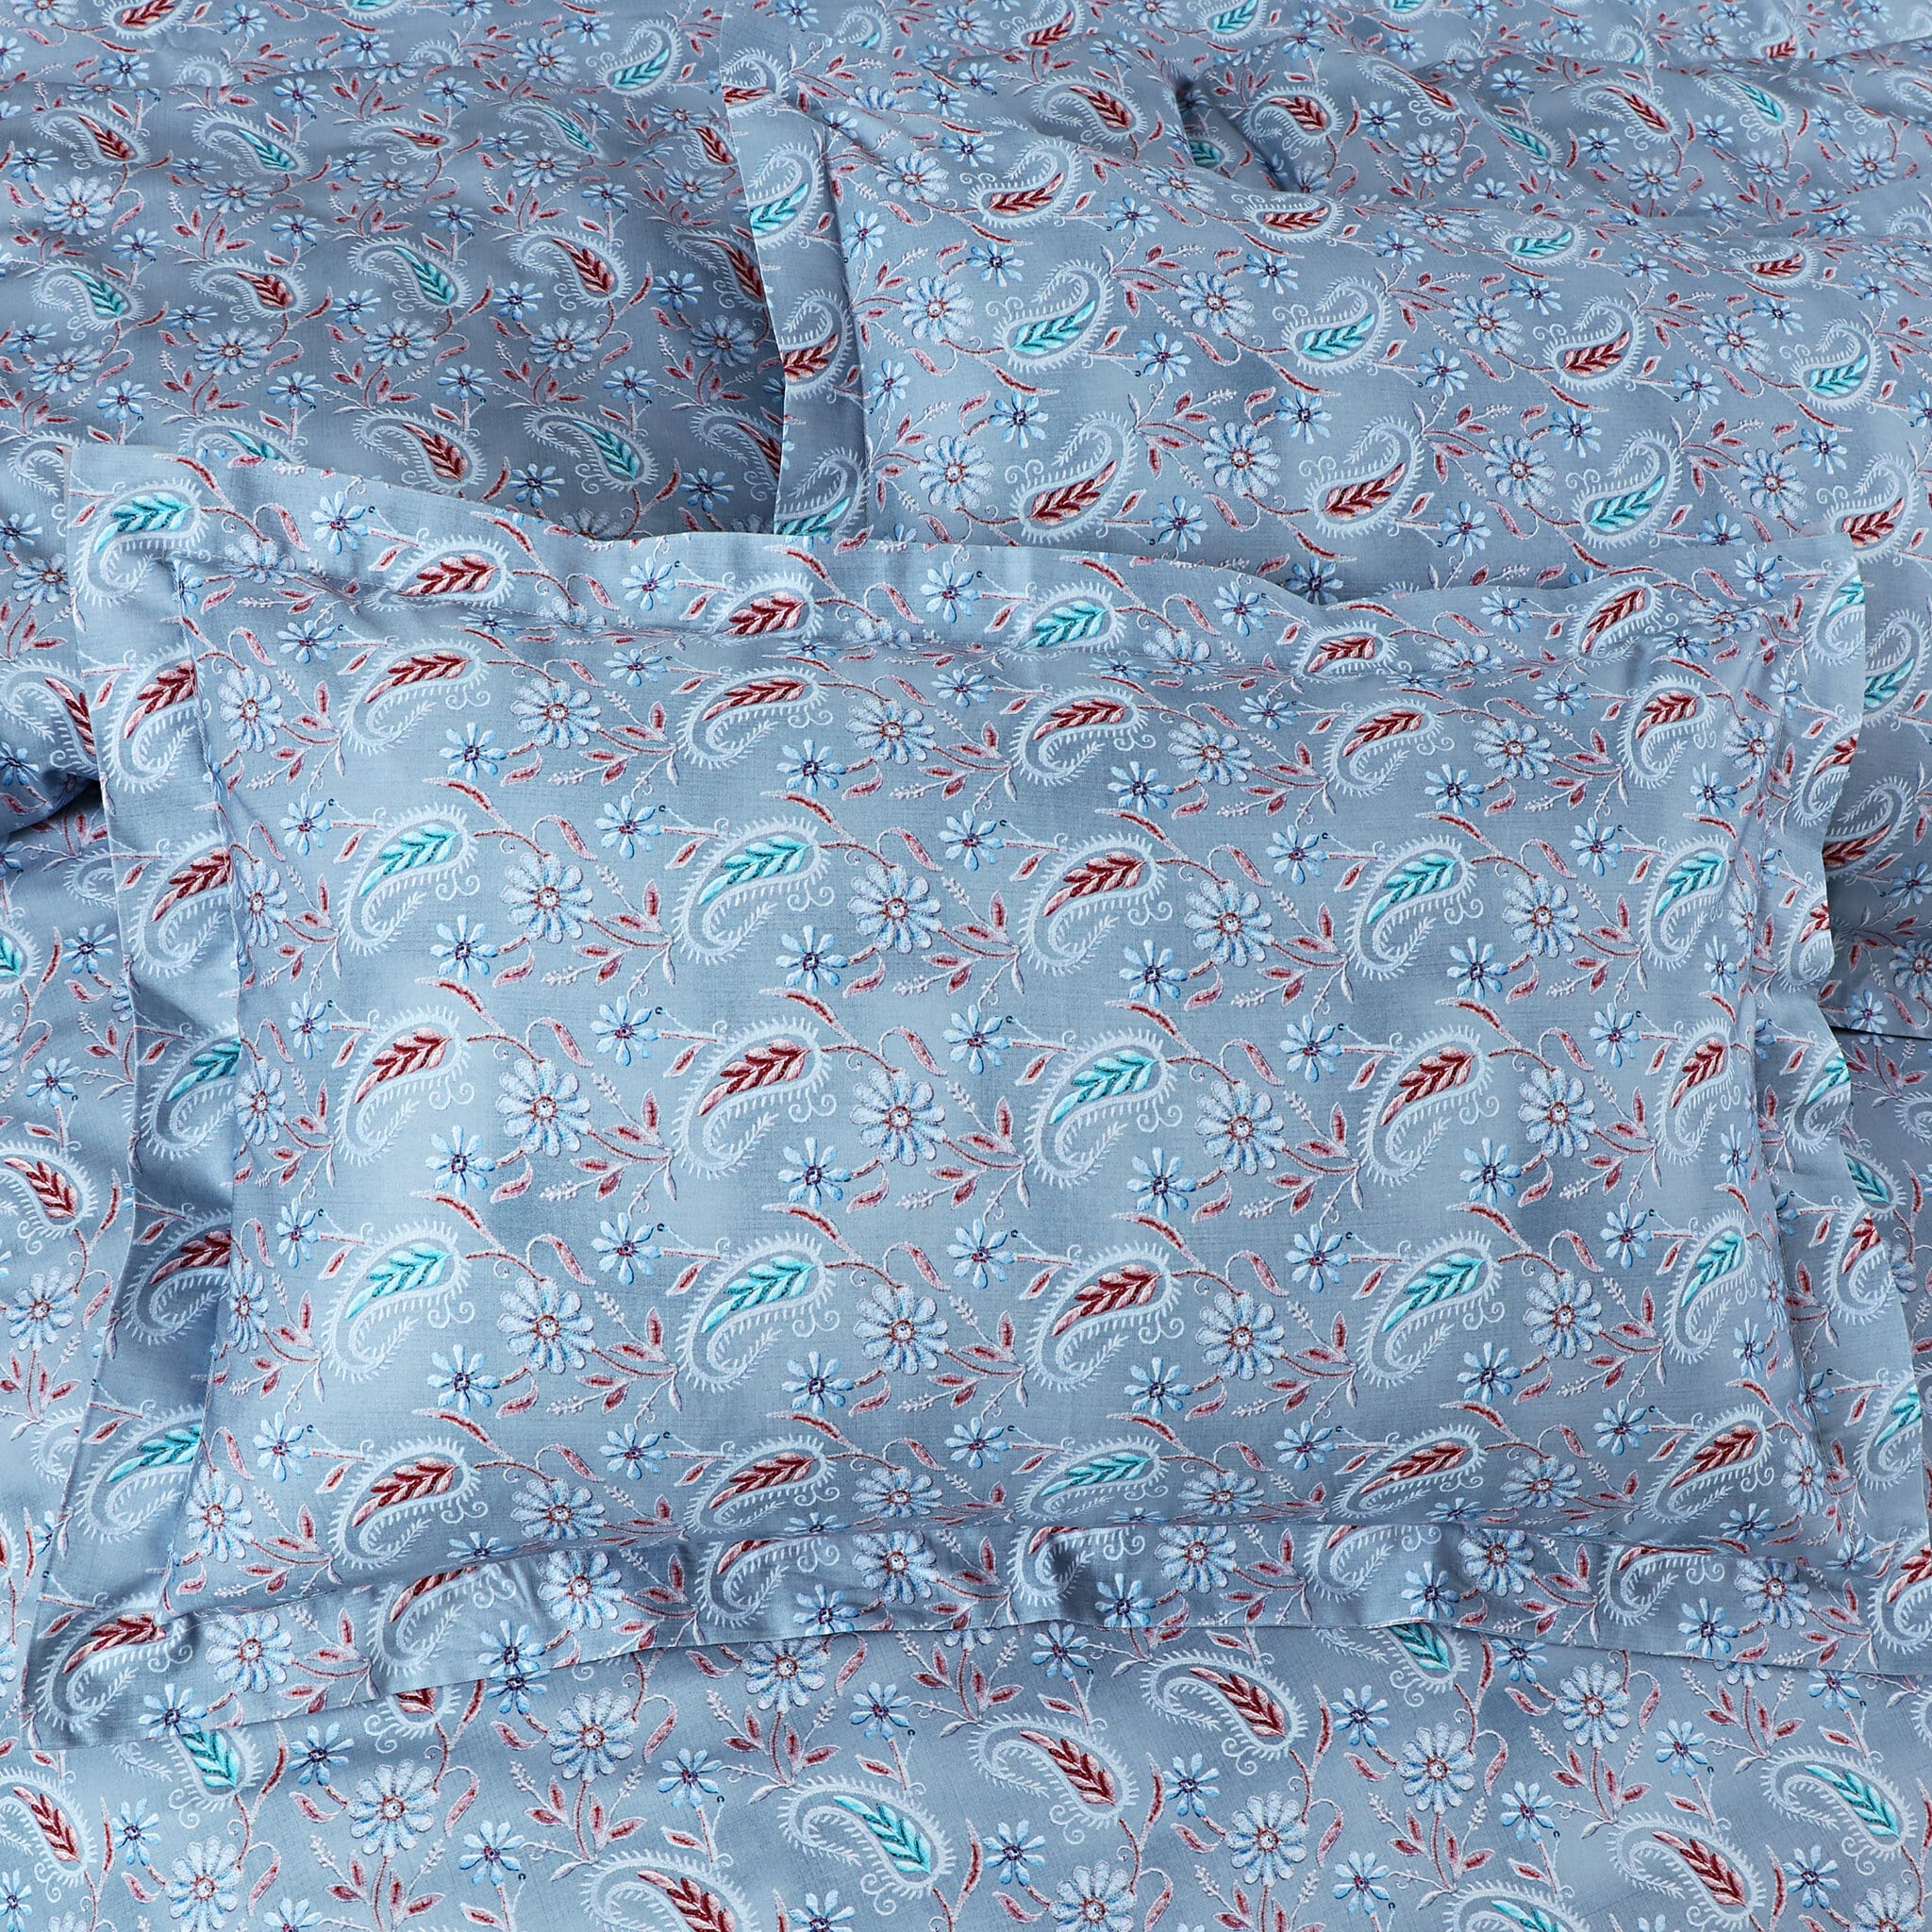 Malako Basel Bedding Set - Blue Paisley 100% Cotton King Size Bedsheet With Comforter